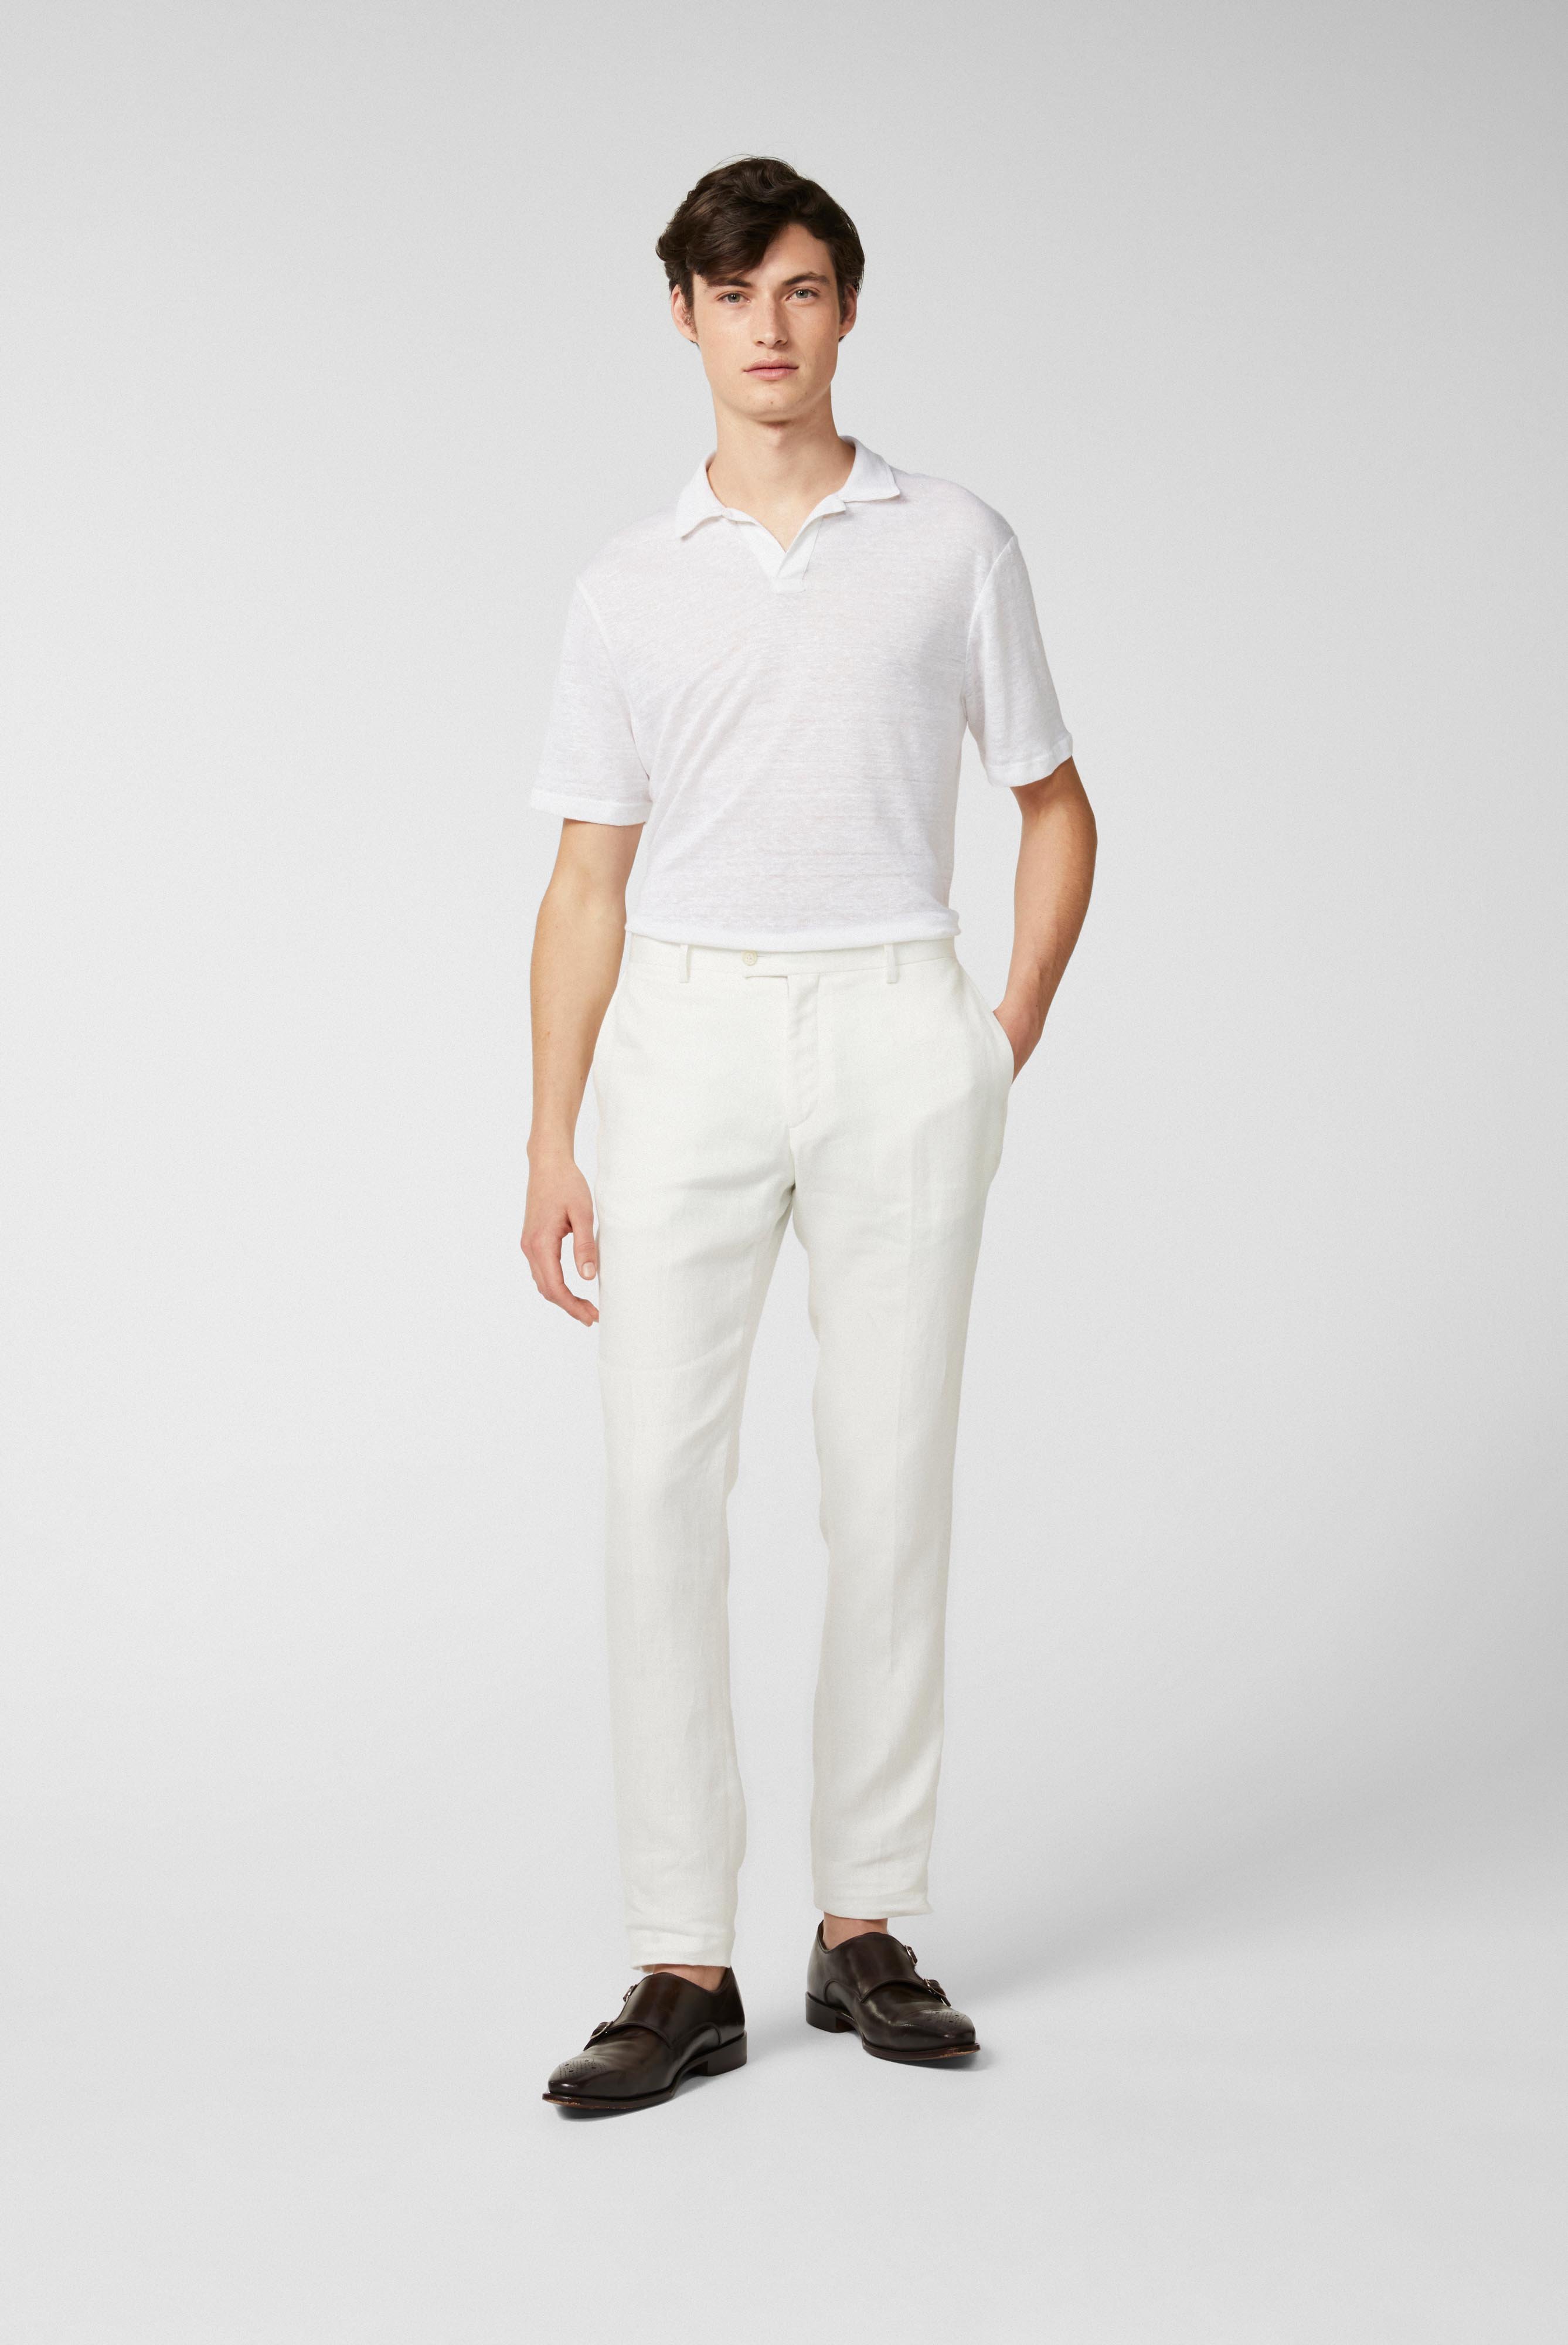 Poloshirts+Linen jersey polo shirt white+20.1783..180125.000.S